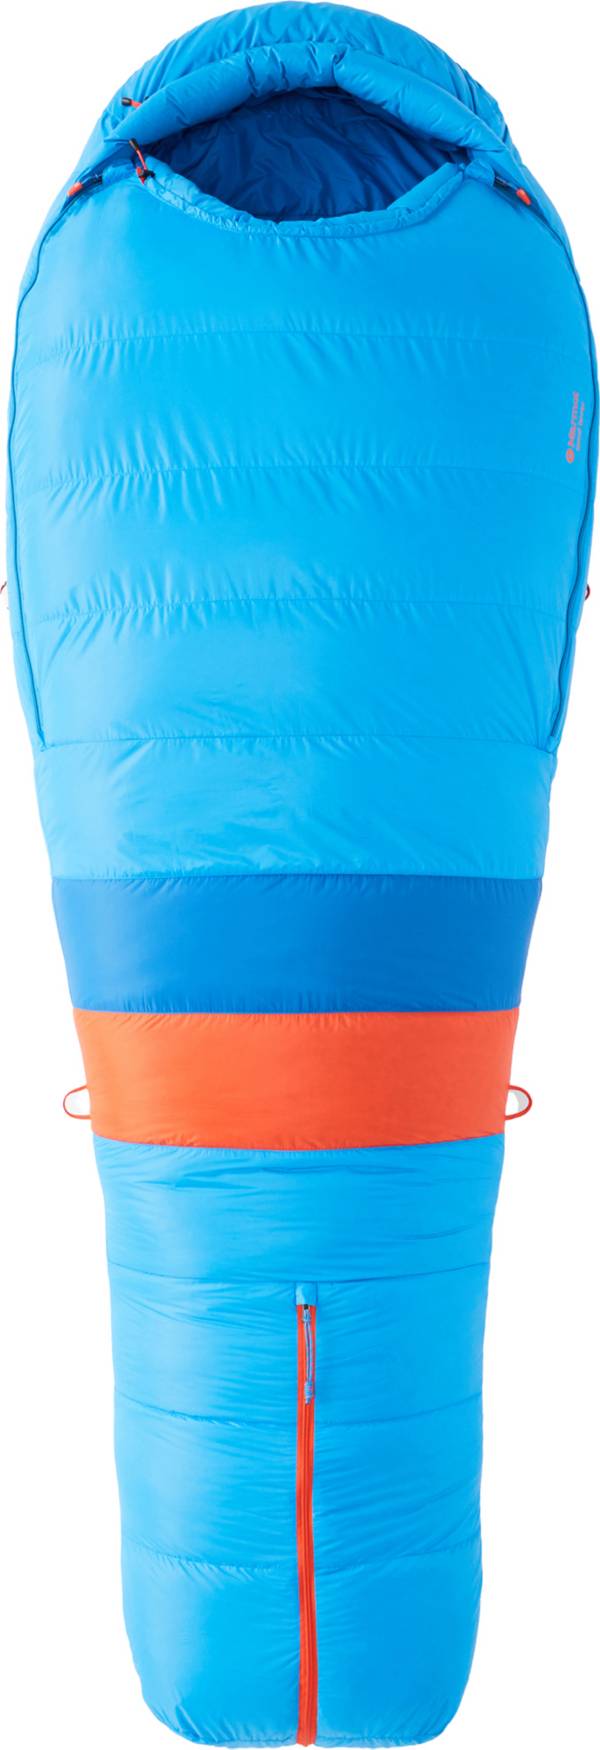 Marmot Wind River -10 Sleeping Bag product image